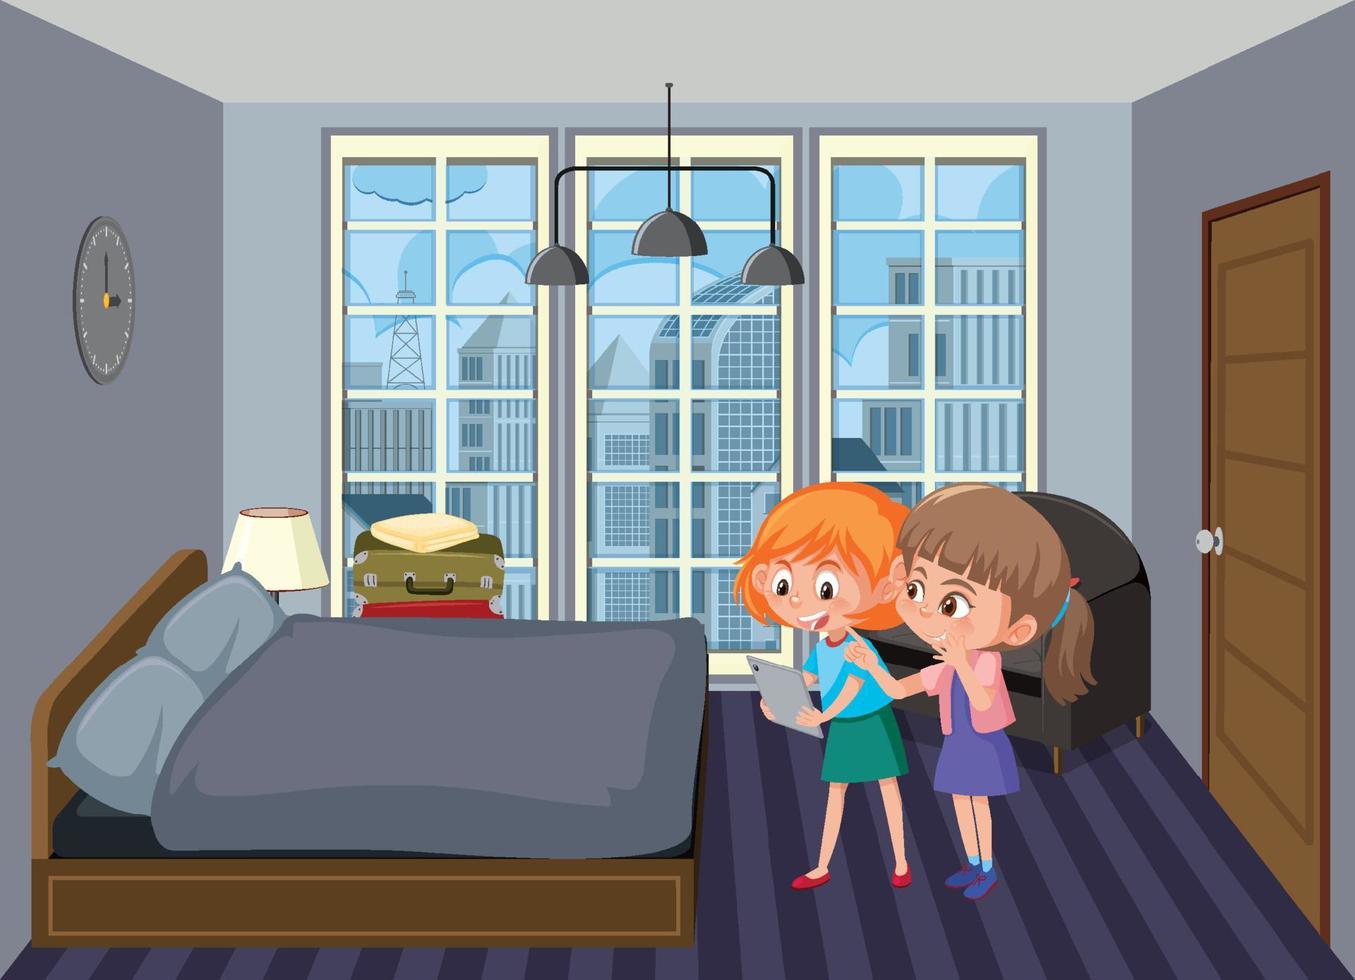 Bedroom scene with family members vector